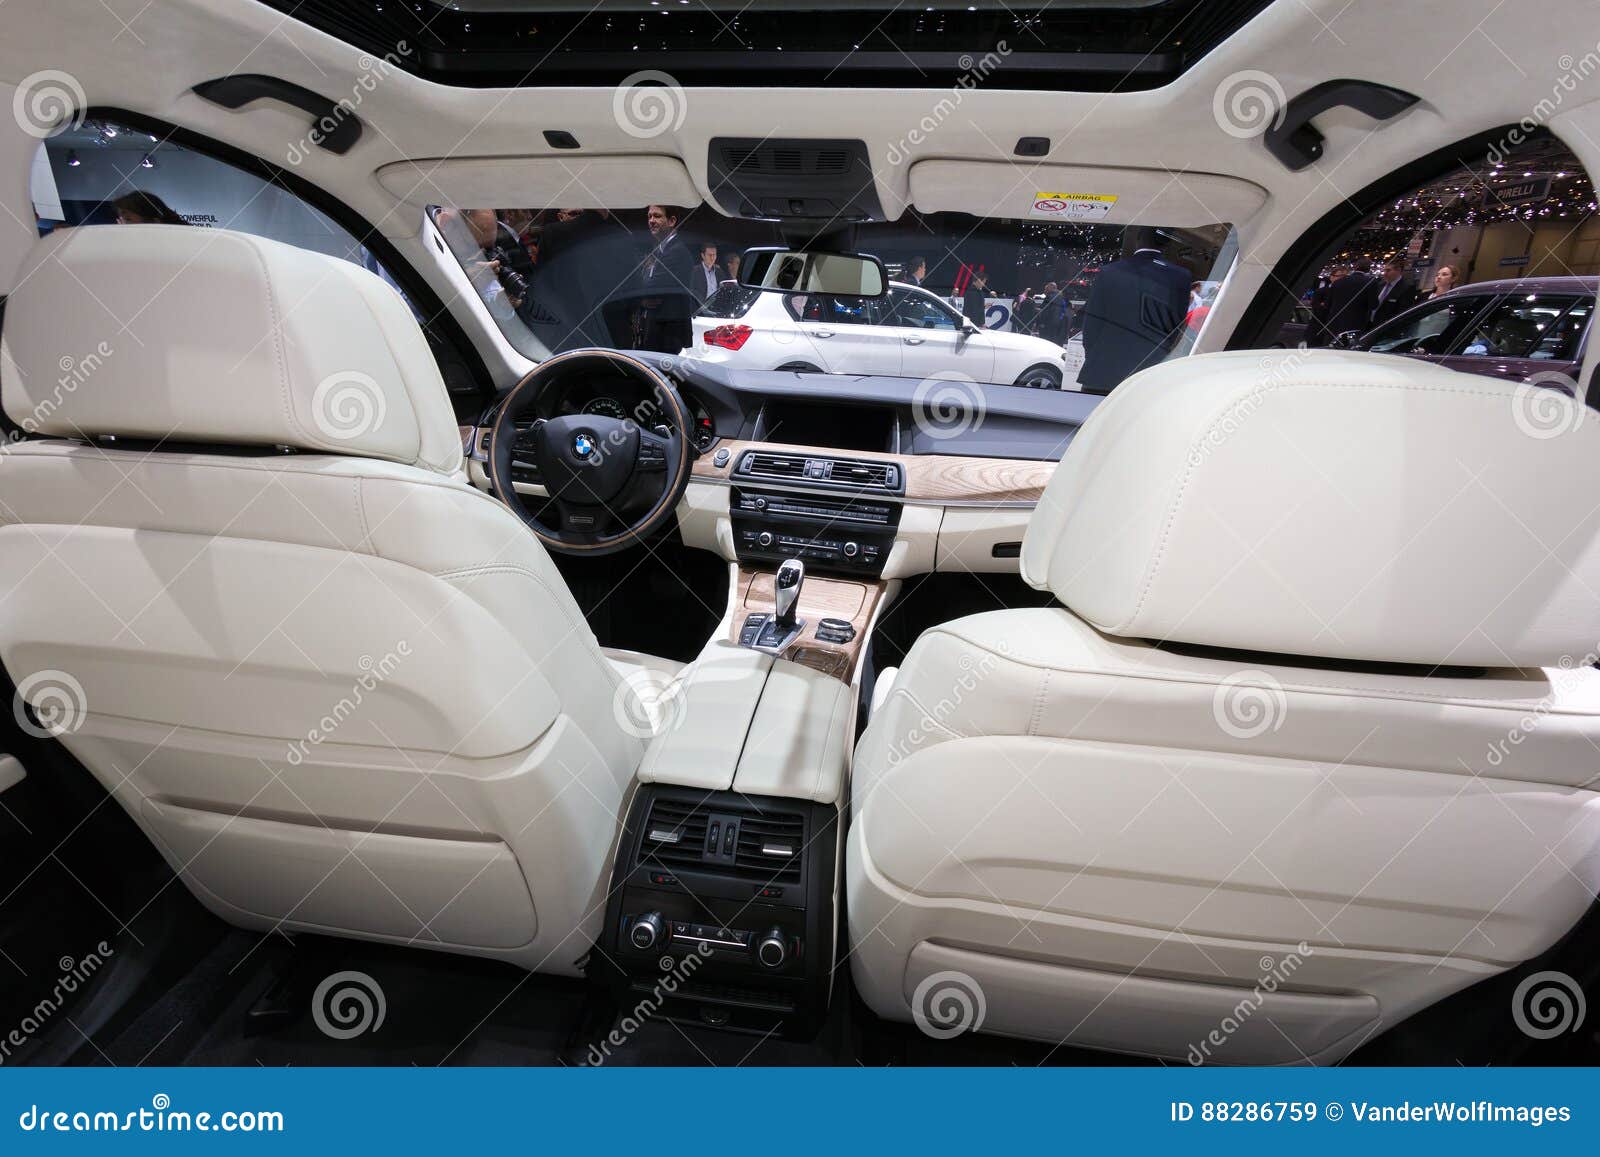 Bmw 530d Xdrive Touring Car Interior Editorial Stock Image